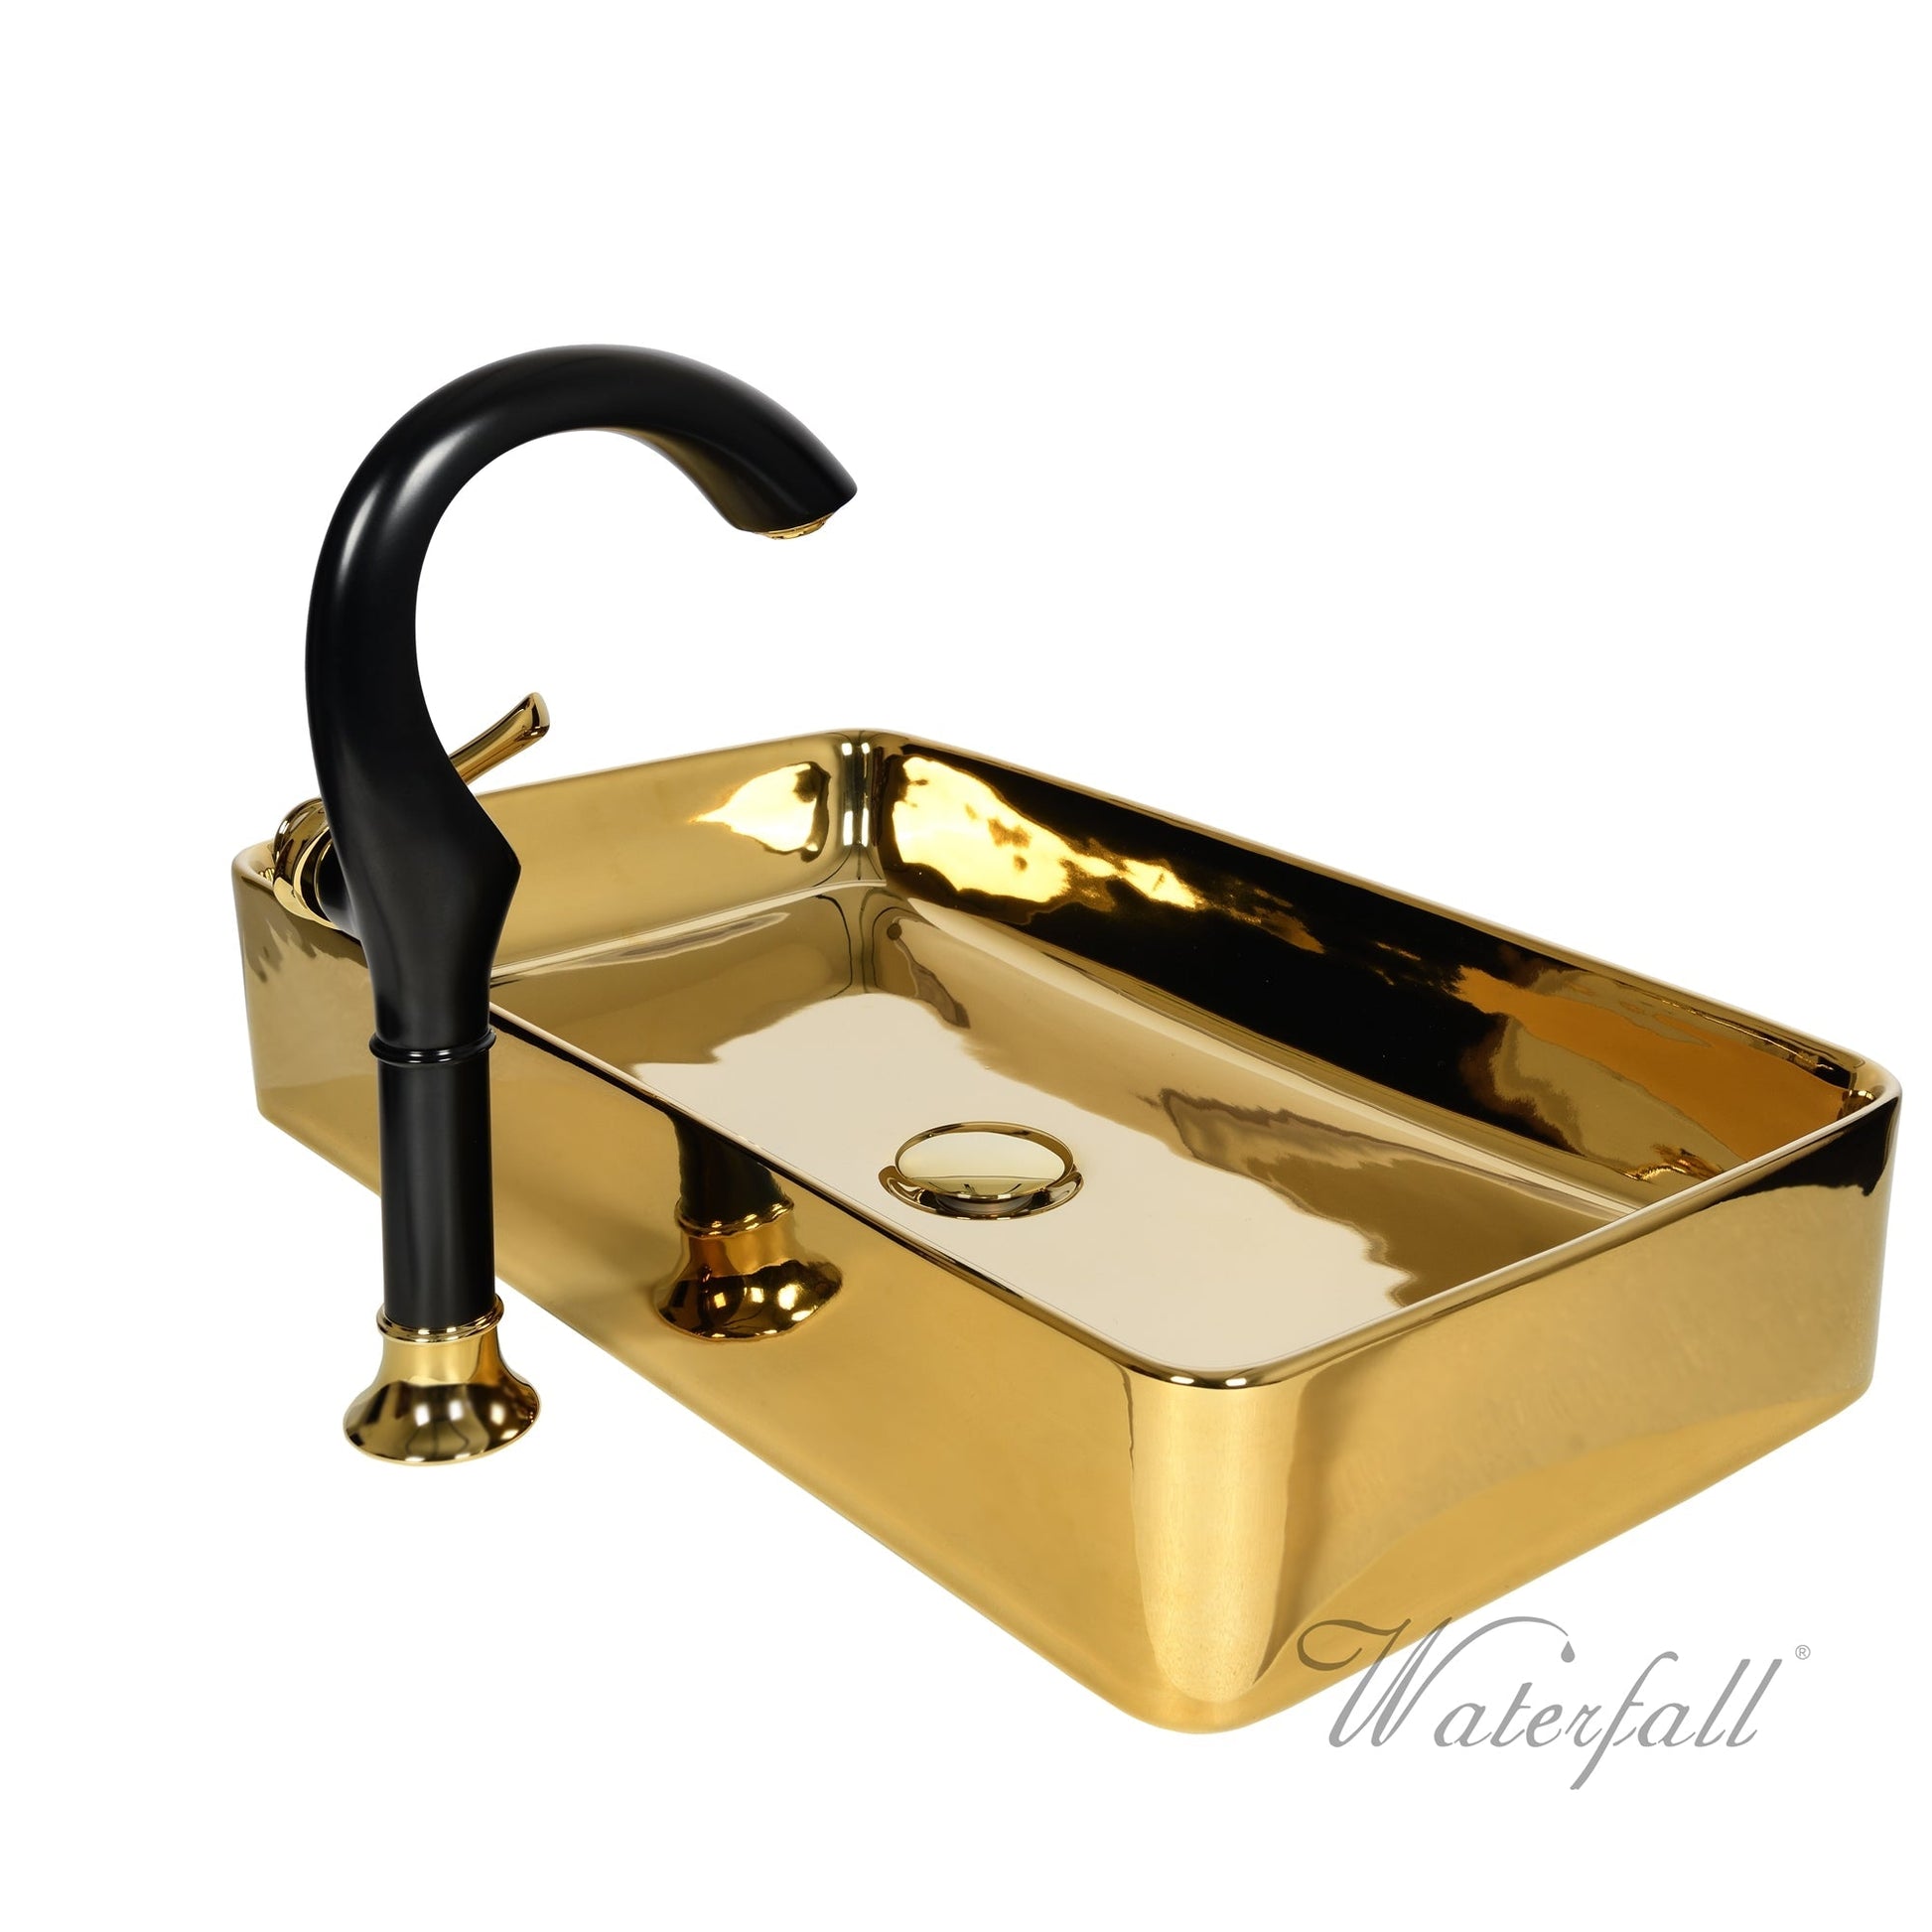 Luxury Gold Ceramic Sink and Single Handle Cairo Faucet Combo - |VESIMI Design| Luxury Bathrooms & Deco